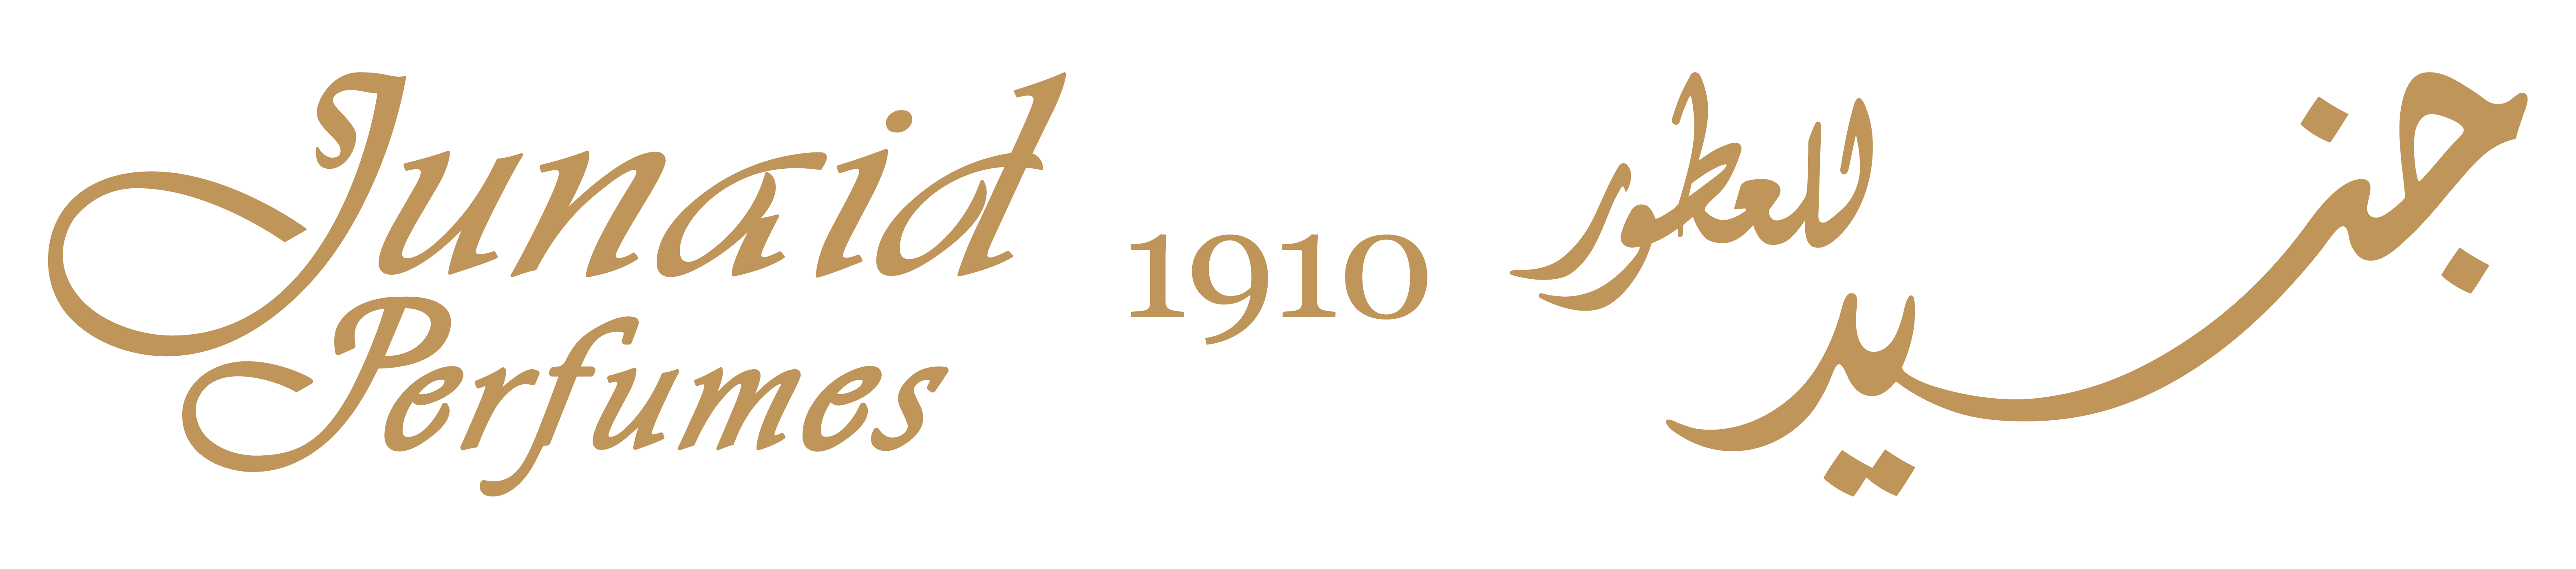 Logo 14